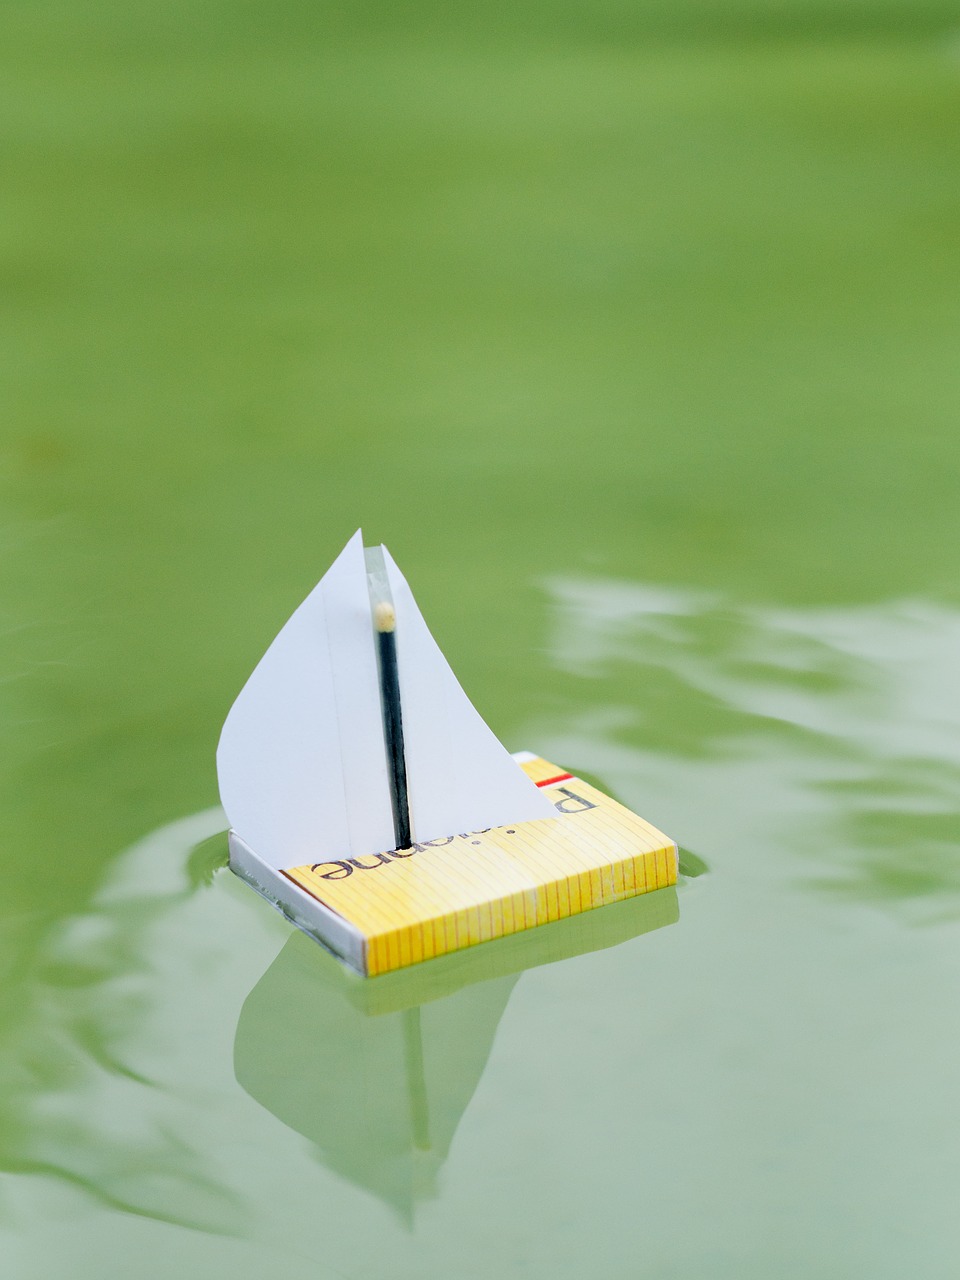 Плавание на бумажных кораблях. Бумажная лодка. Бумажные лодочки. Бумажная яхта. Бумажный корабль на воде.